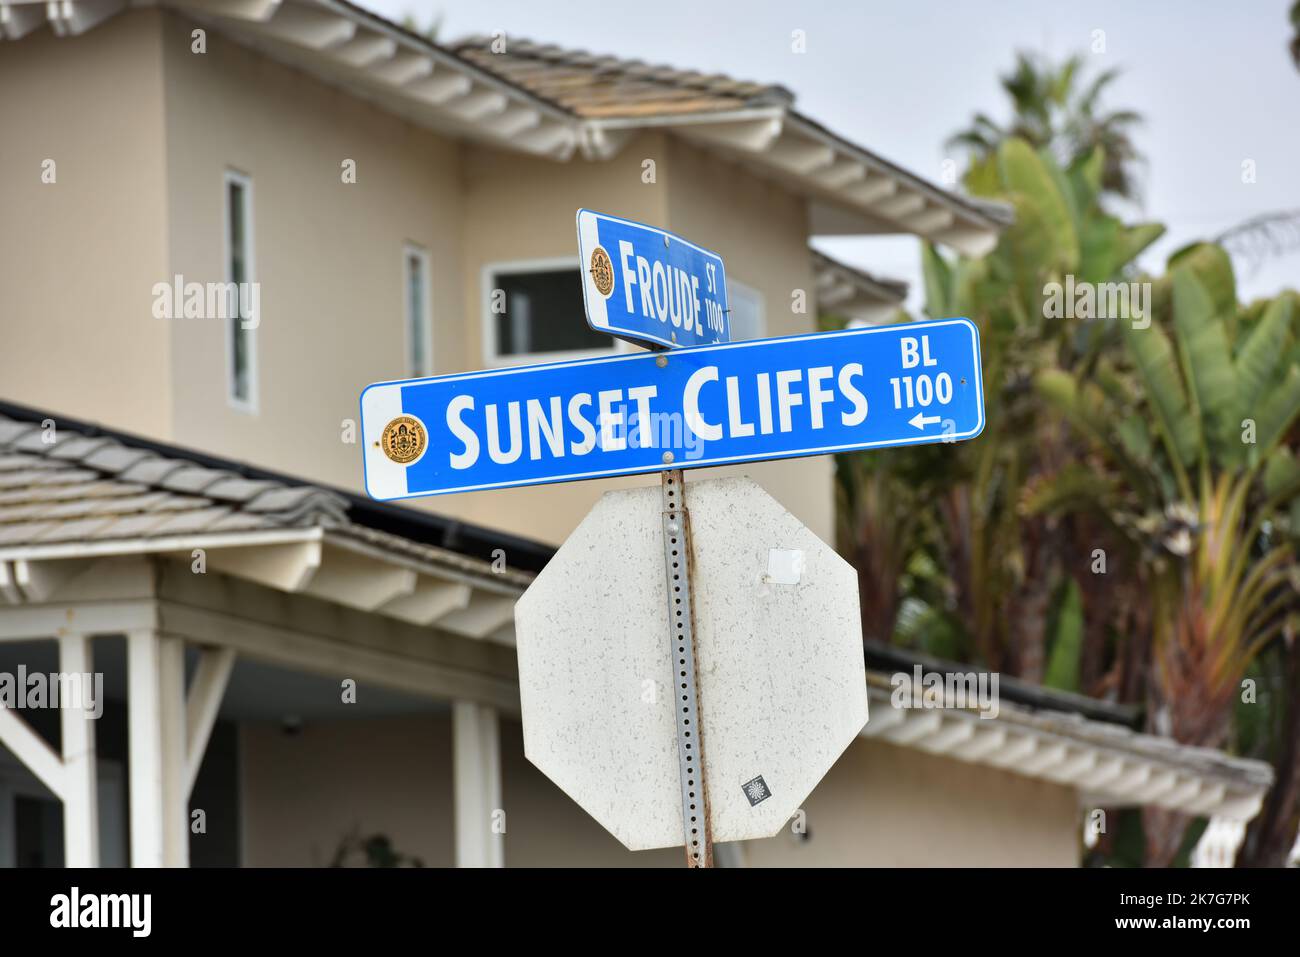 Particular at Sunset Cliffs, San Diego Stock Photo